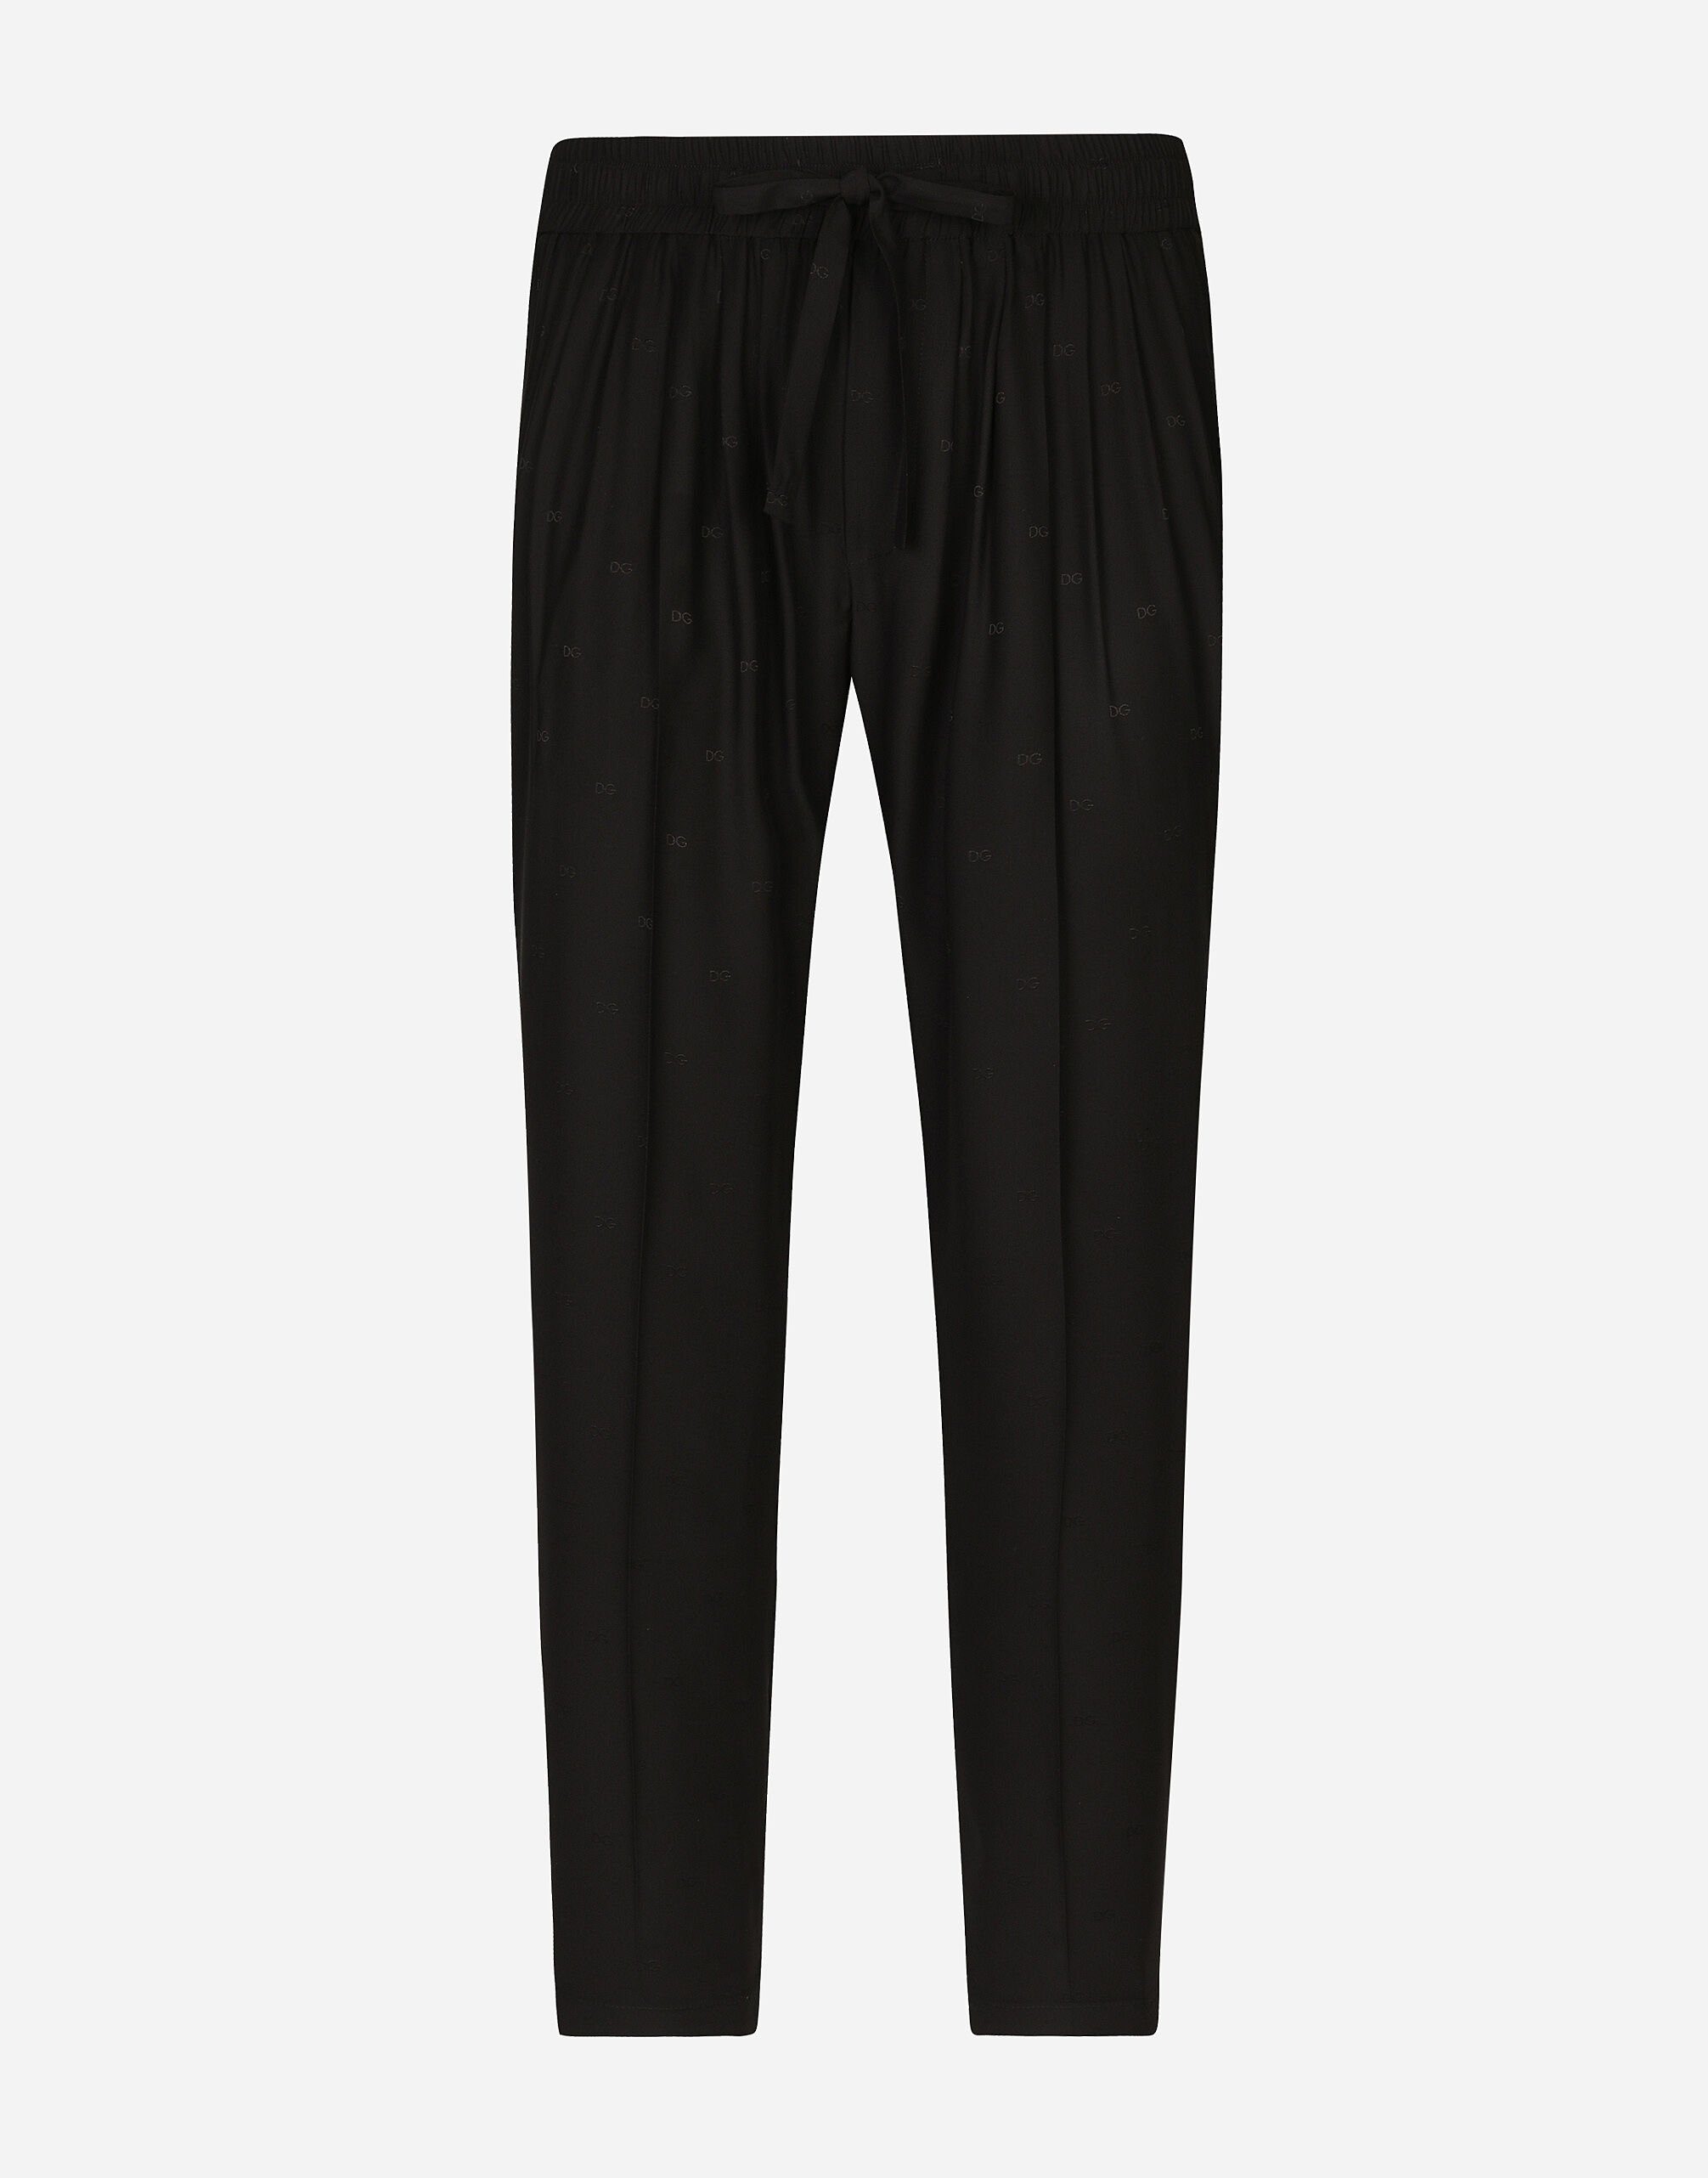 Dolce & Gabbana Silk crepe de chine jogging pants Black GP03JTGH253